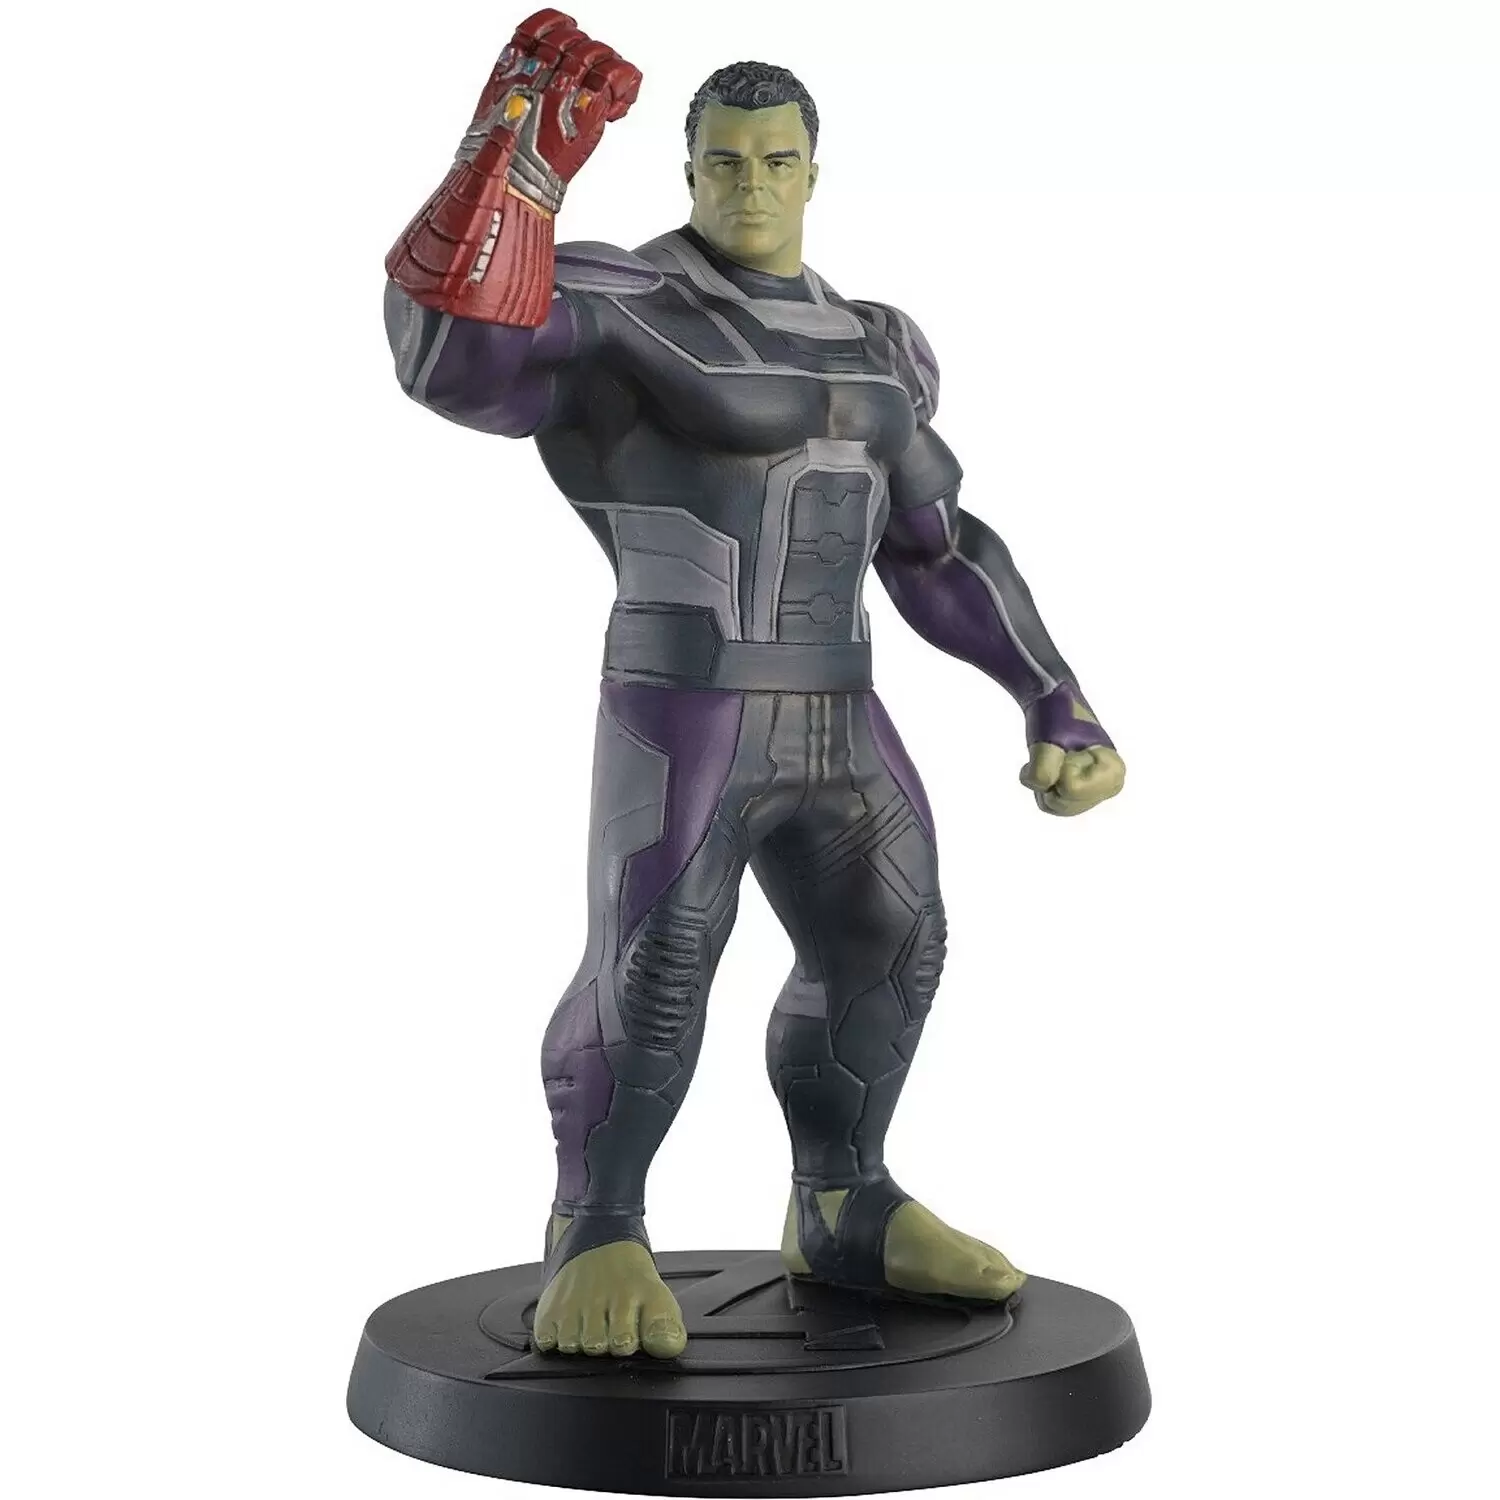 Figurines des films Marvel - Marvel Smart Hulk Figurine (Avengers: Endgame)